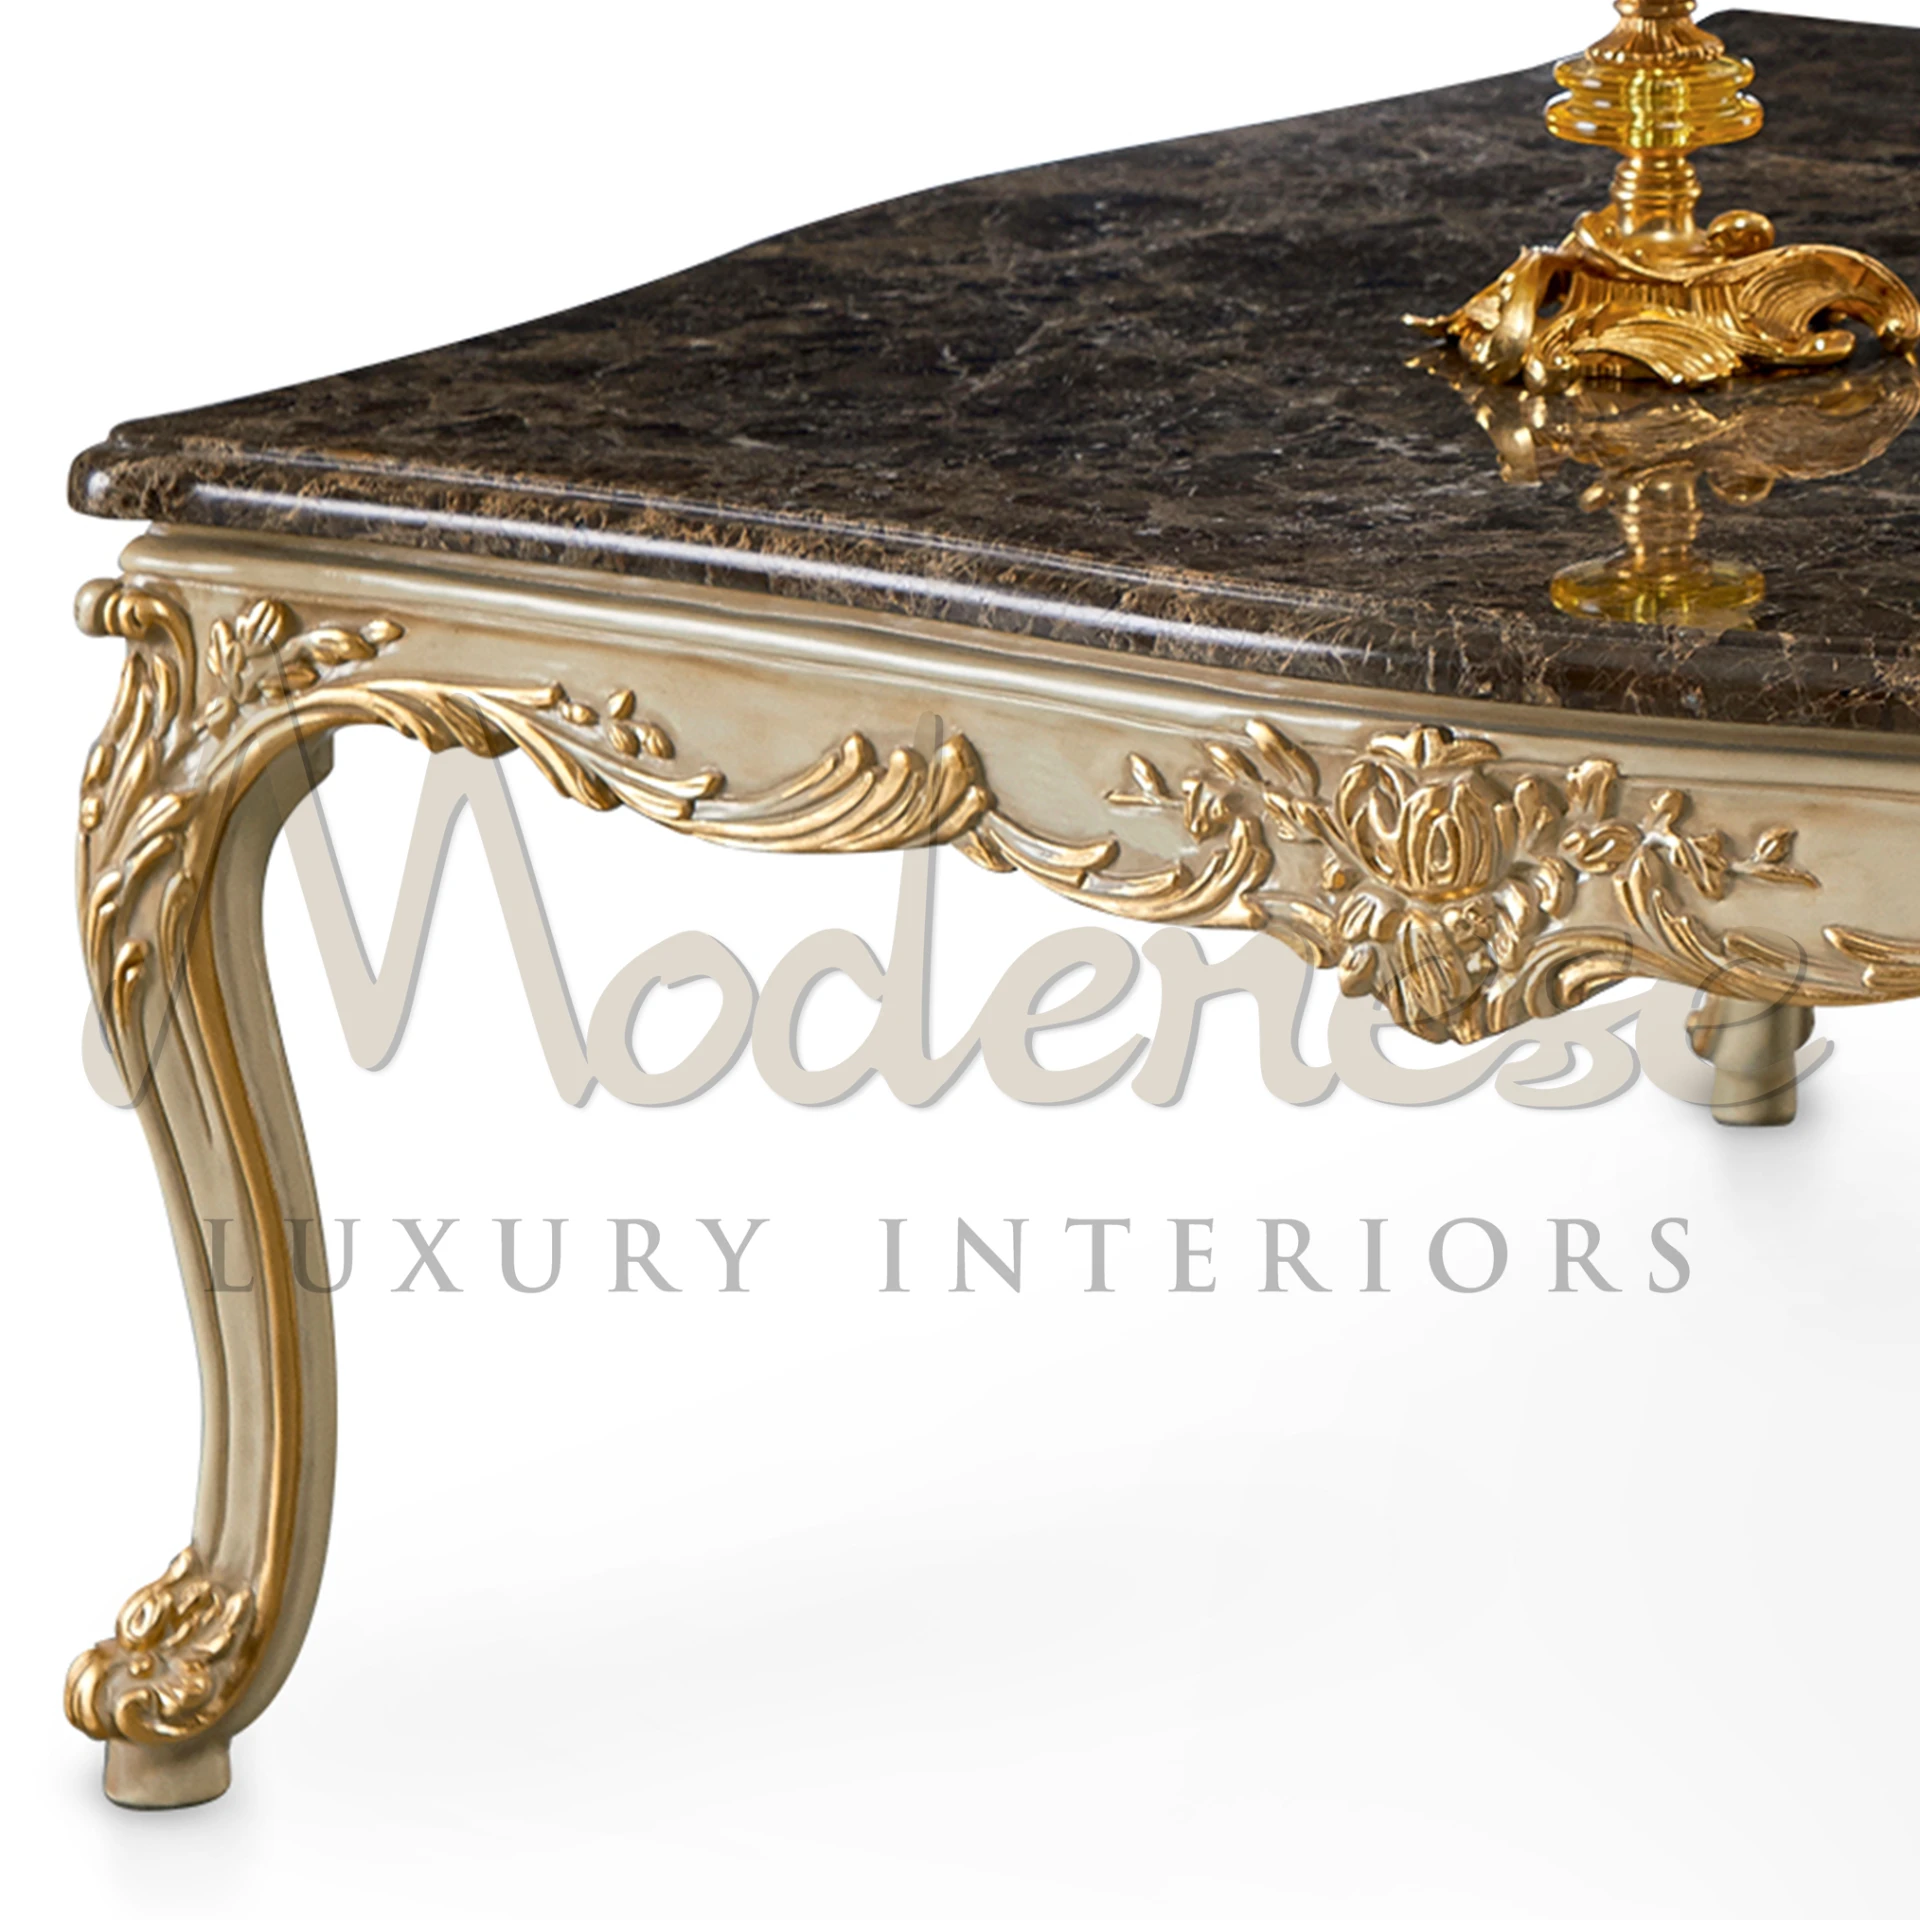 Elegant gold leaf side table, adding luxury to modern interiors.